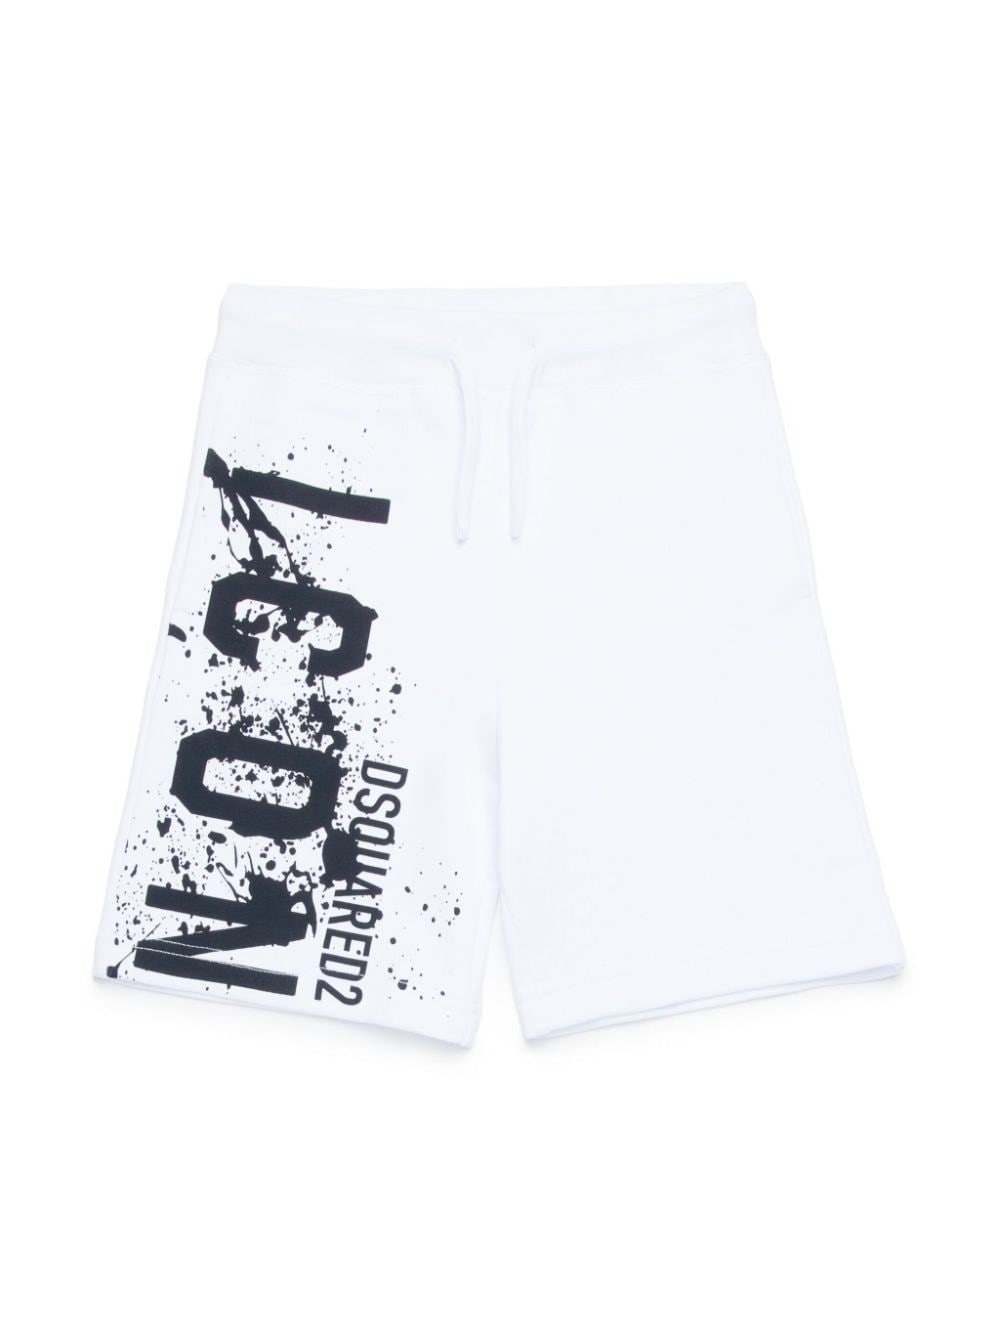 White Bermuda shorts for boys with ICON logo